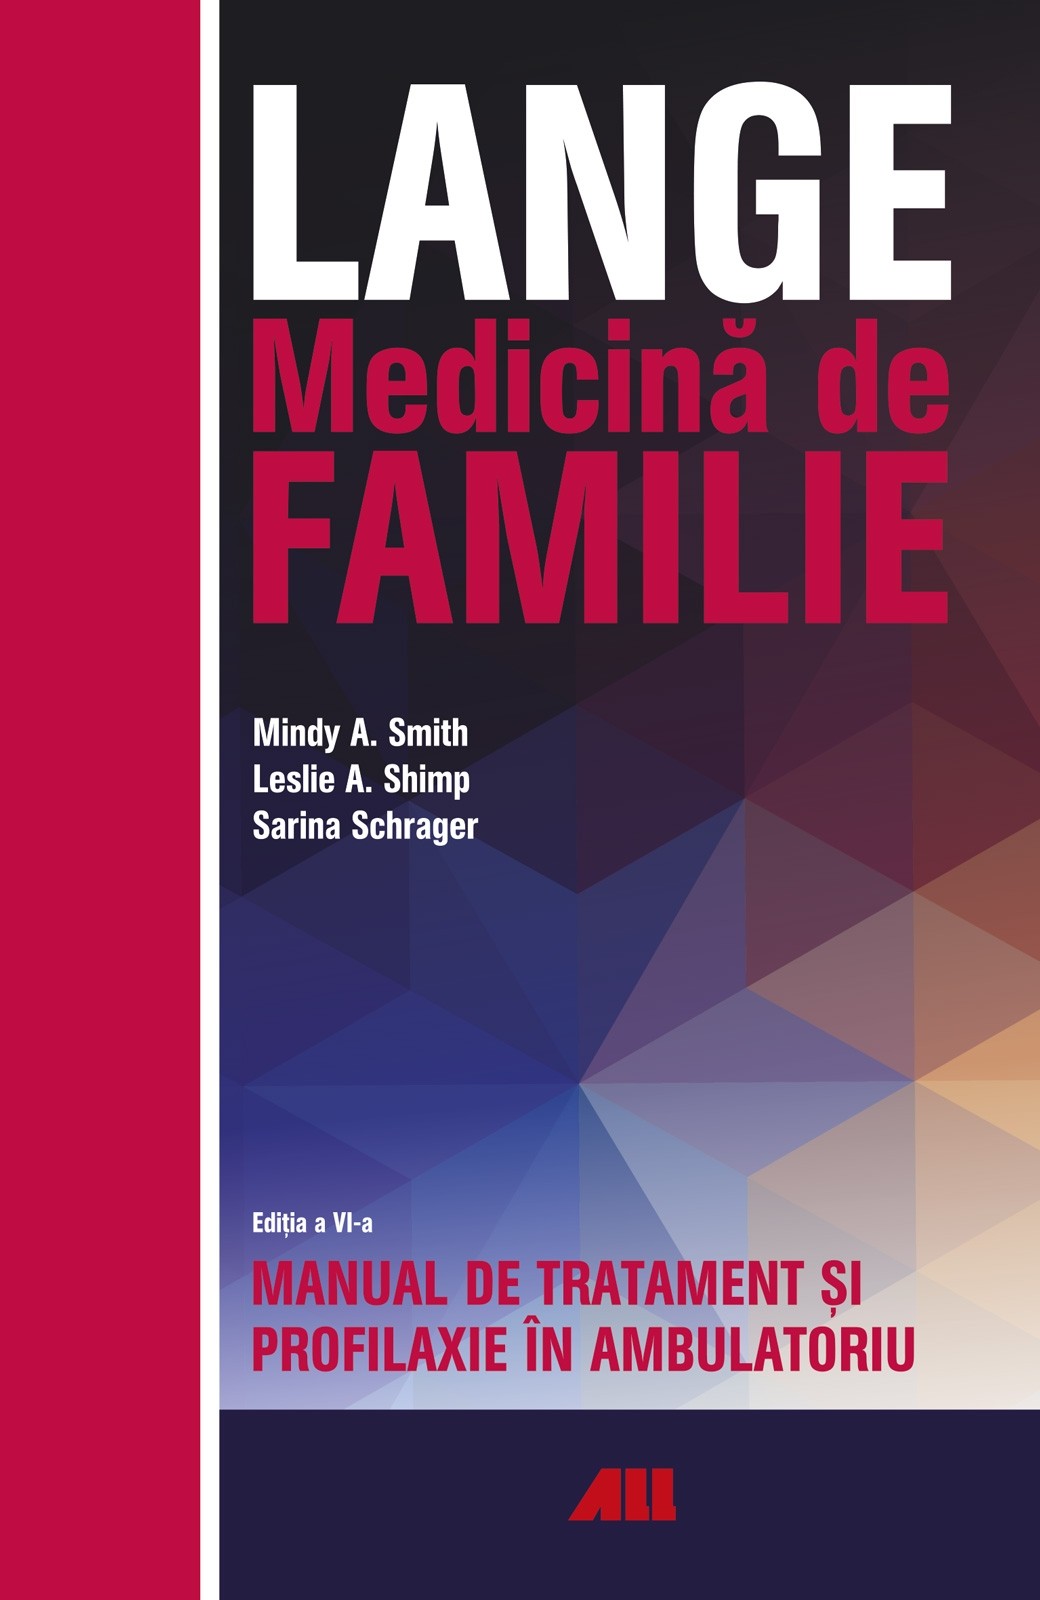 LANGE. Medicina de familie | Leslie A. Shimp, Mindy A. Smith, Sarina Schrager ALL poza 2022